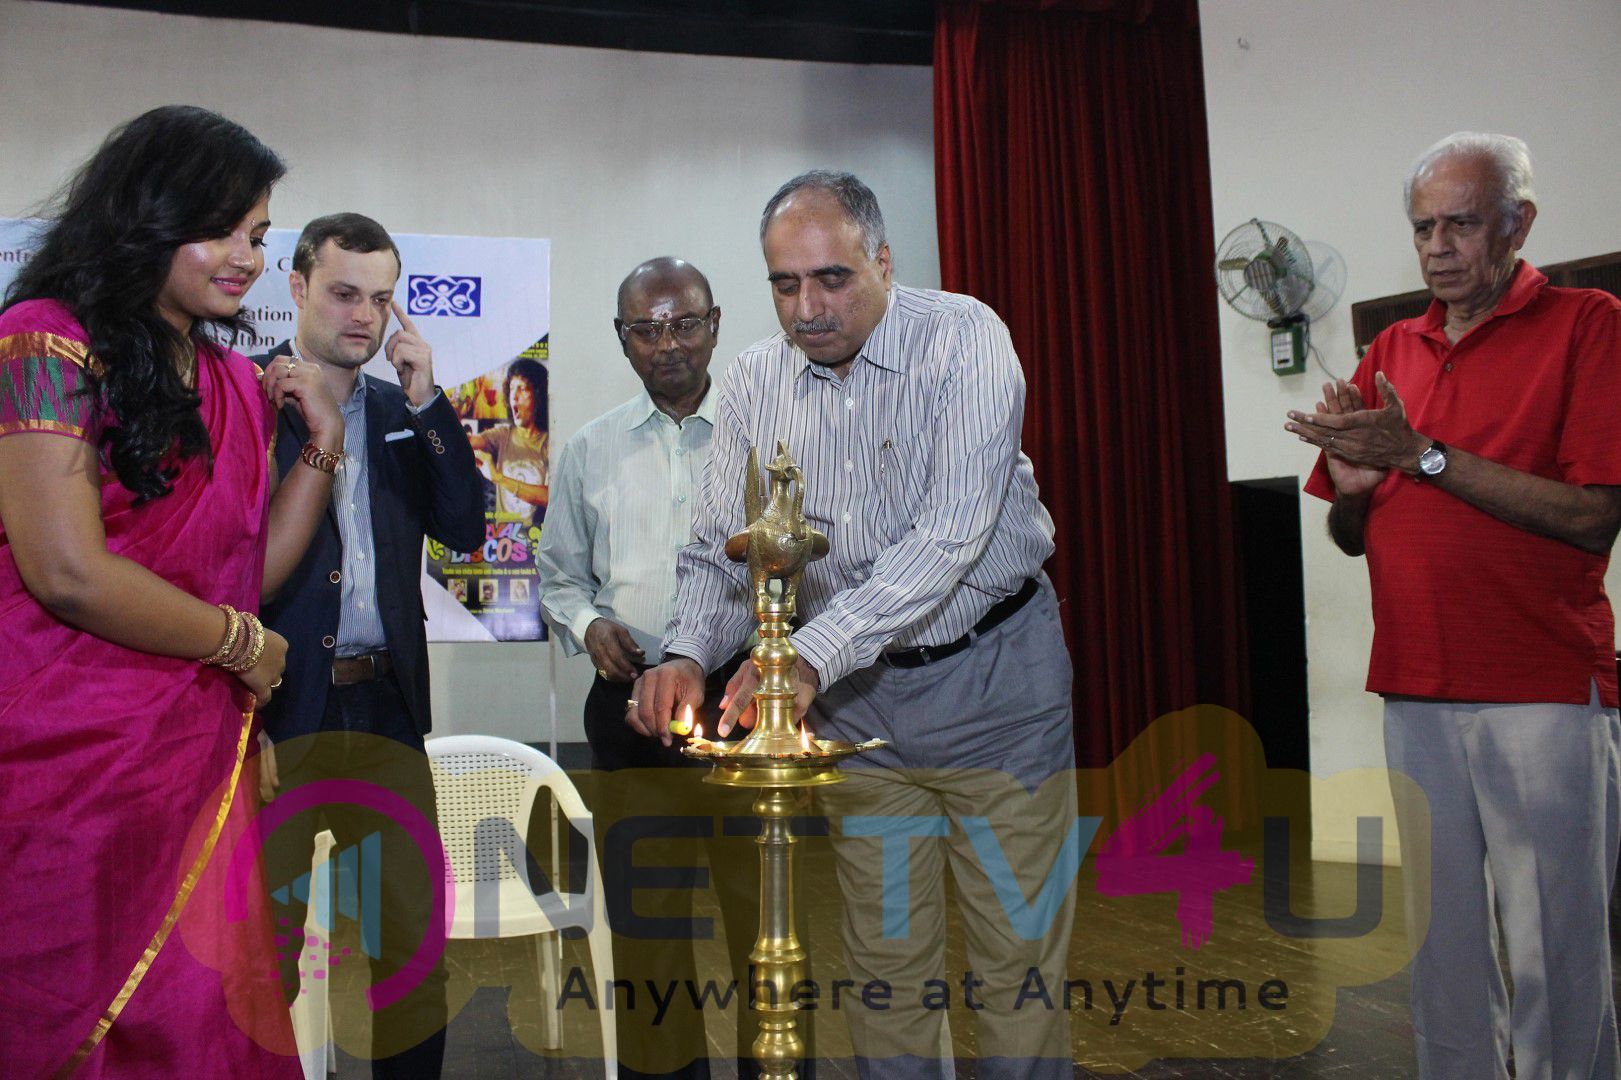 Brics Film Festival Event Excellent Stills Tamil Gallery